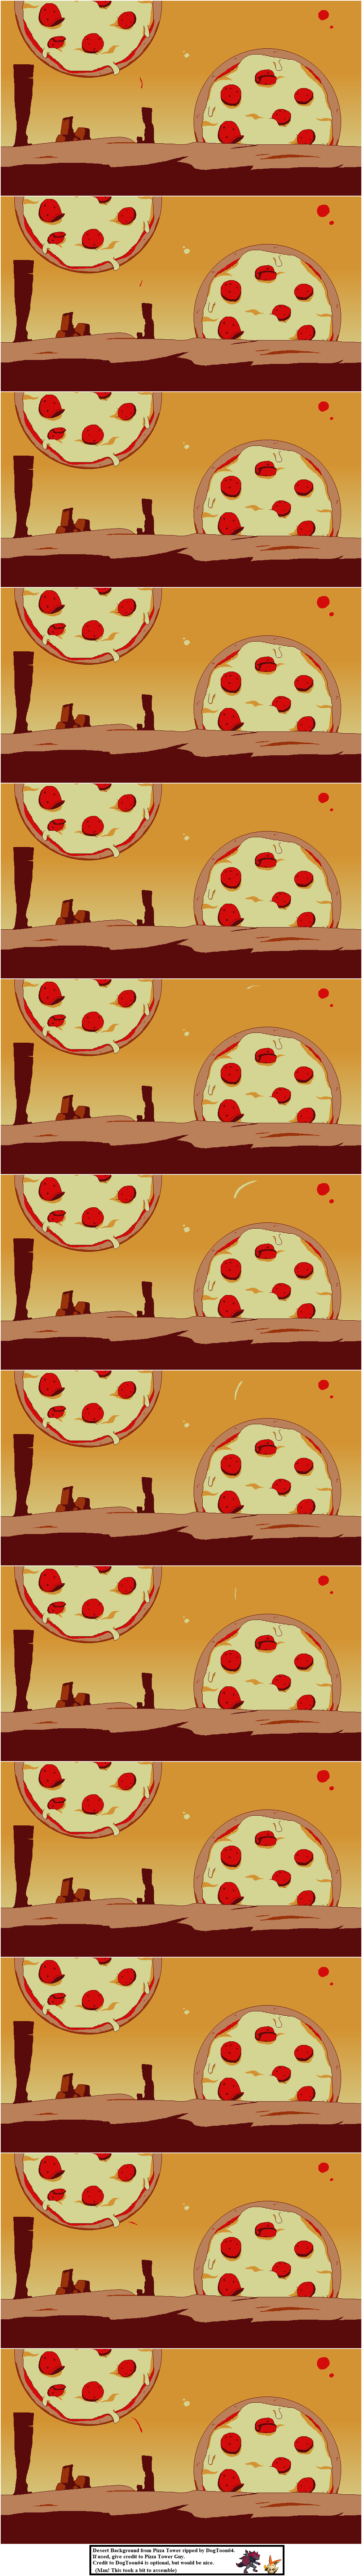 Pizza Tower - Desert Background (Demo)